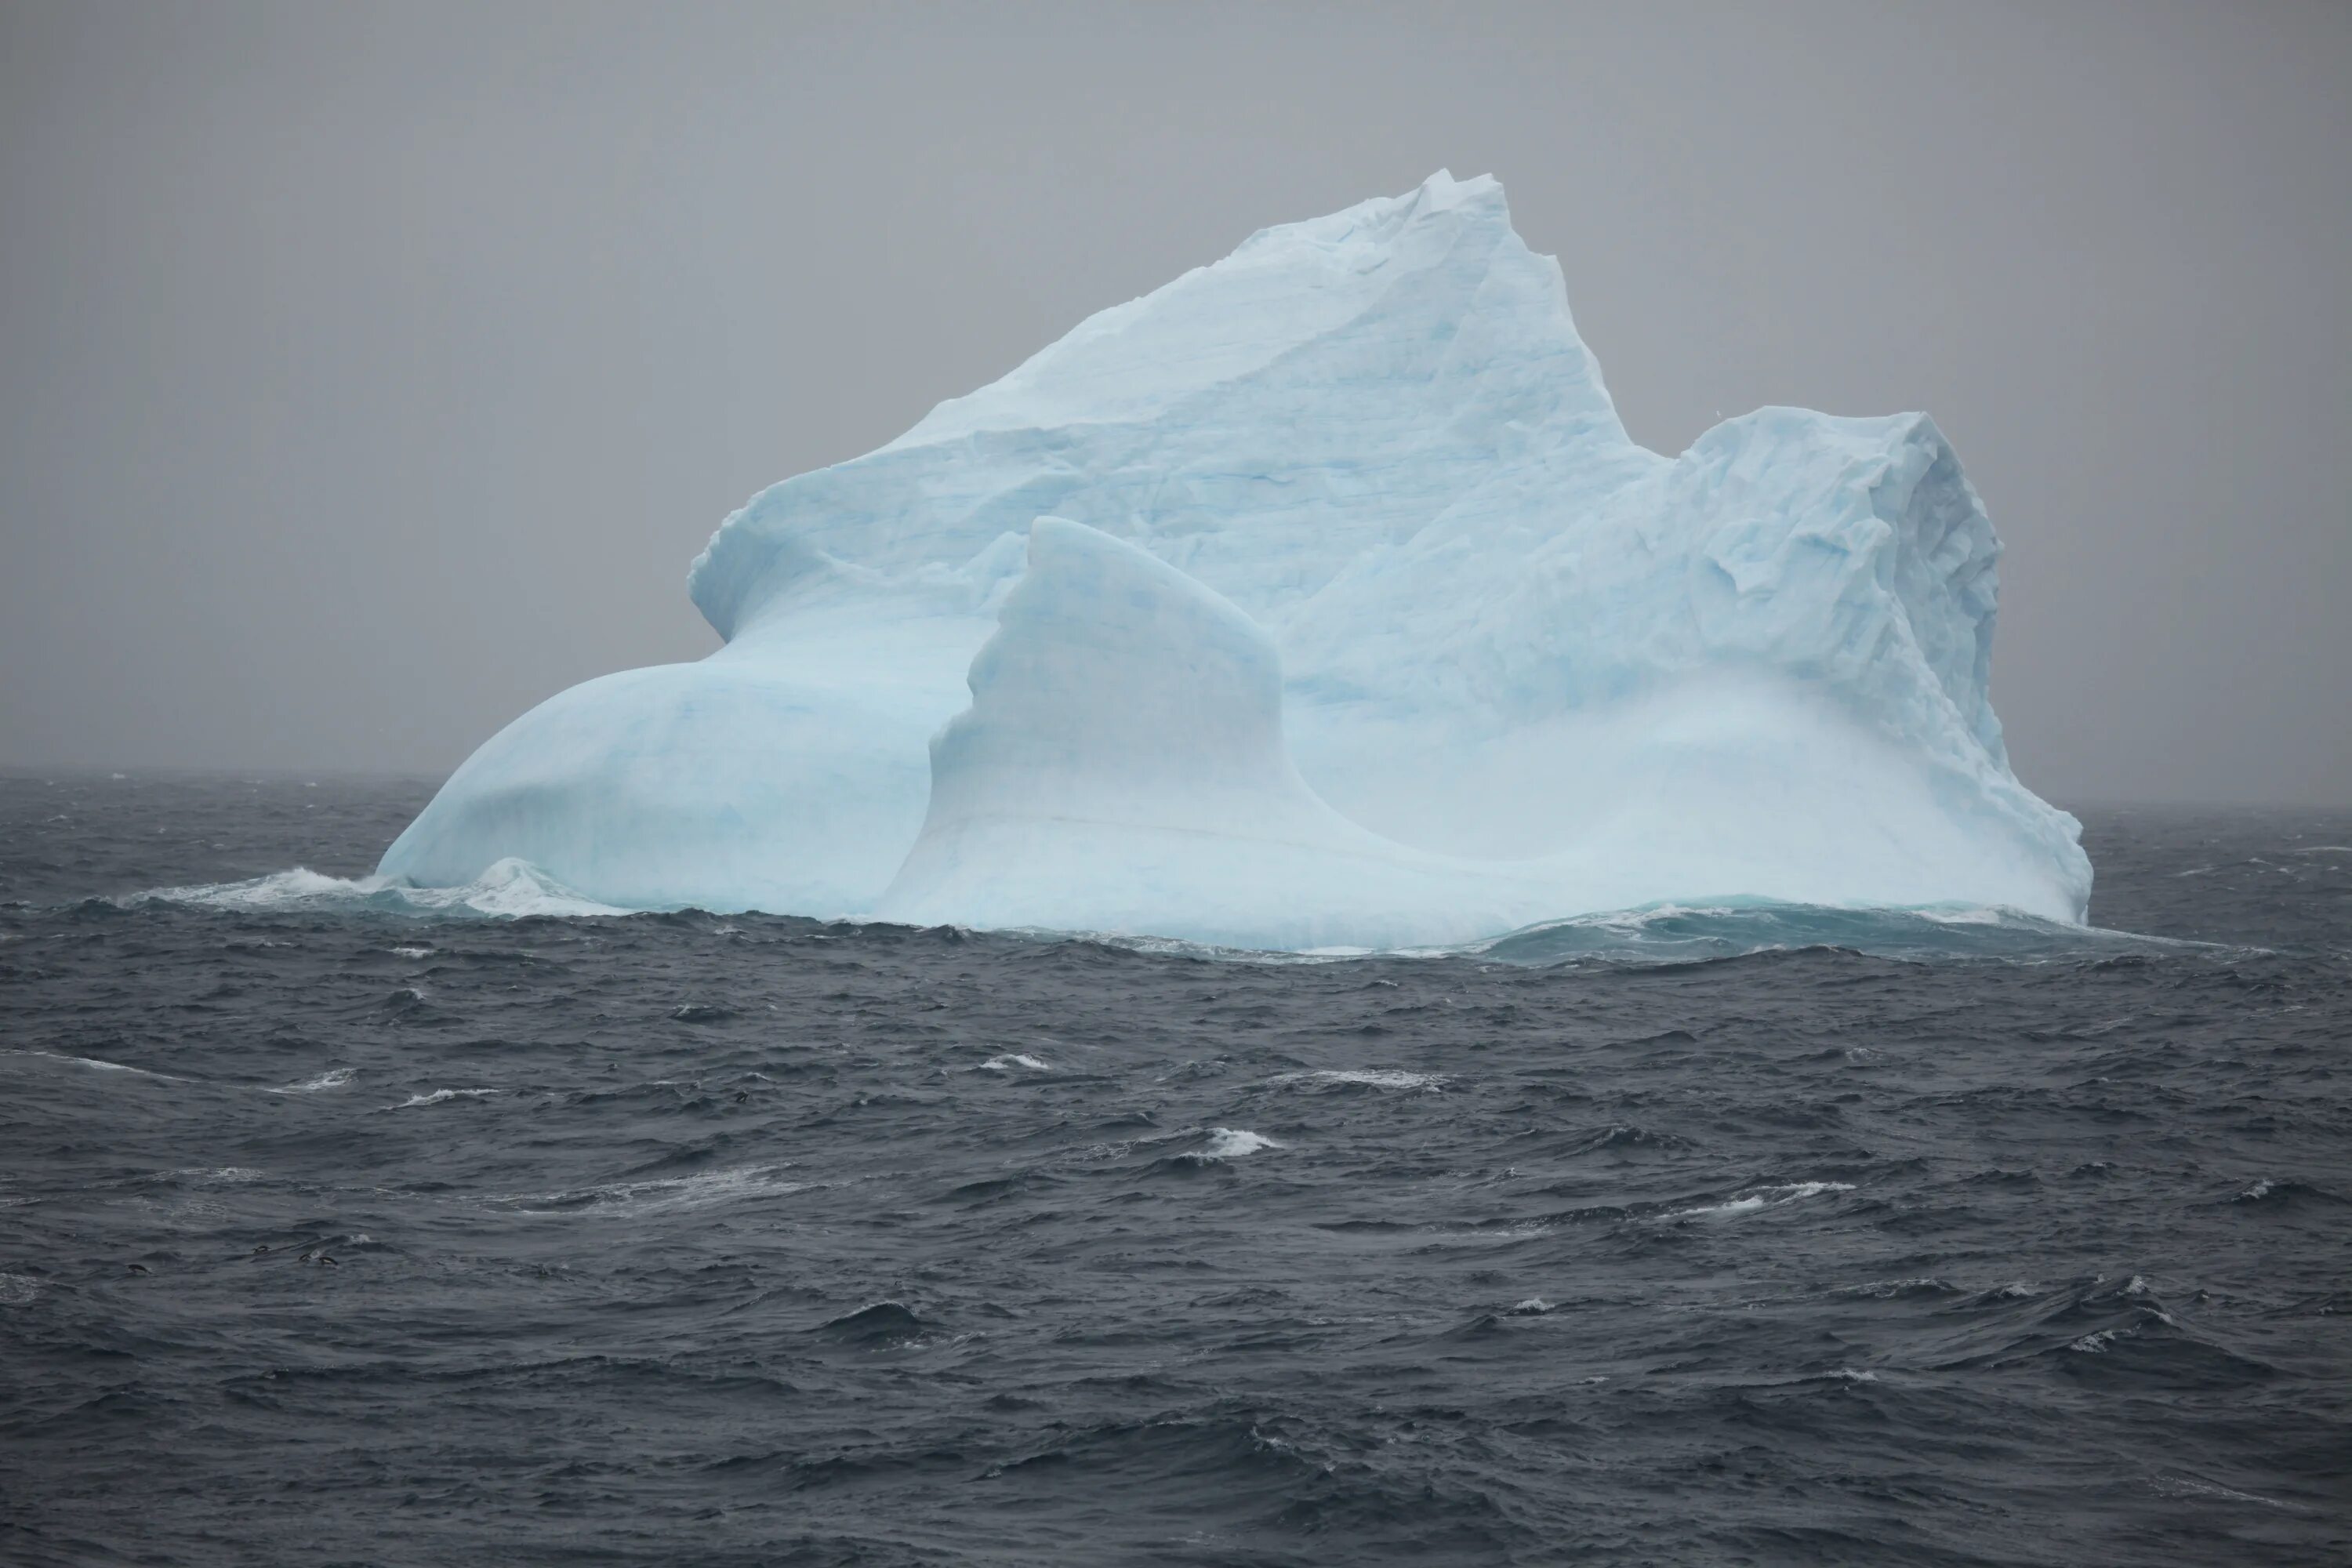 Айсберг в океане текст. Южный океан. Айсберг. Антарктика океан.